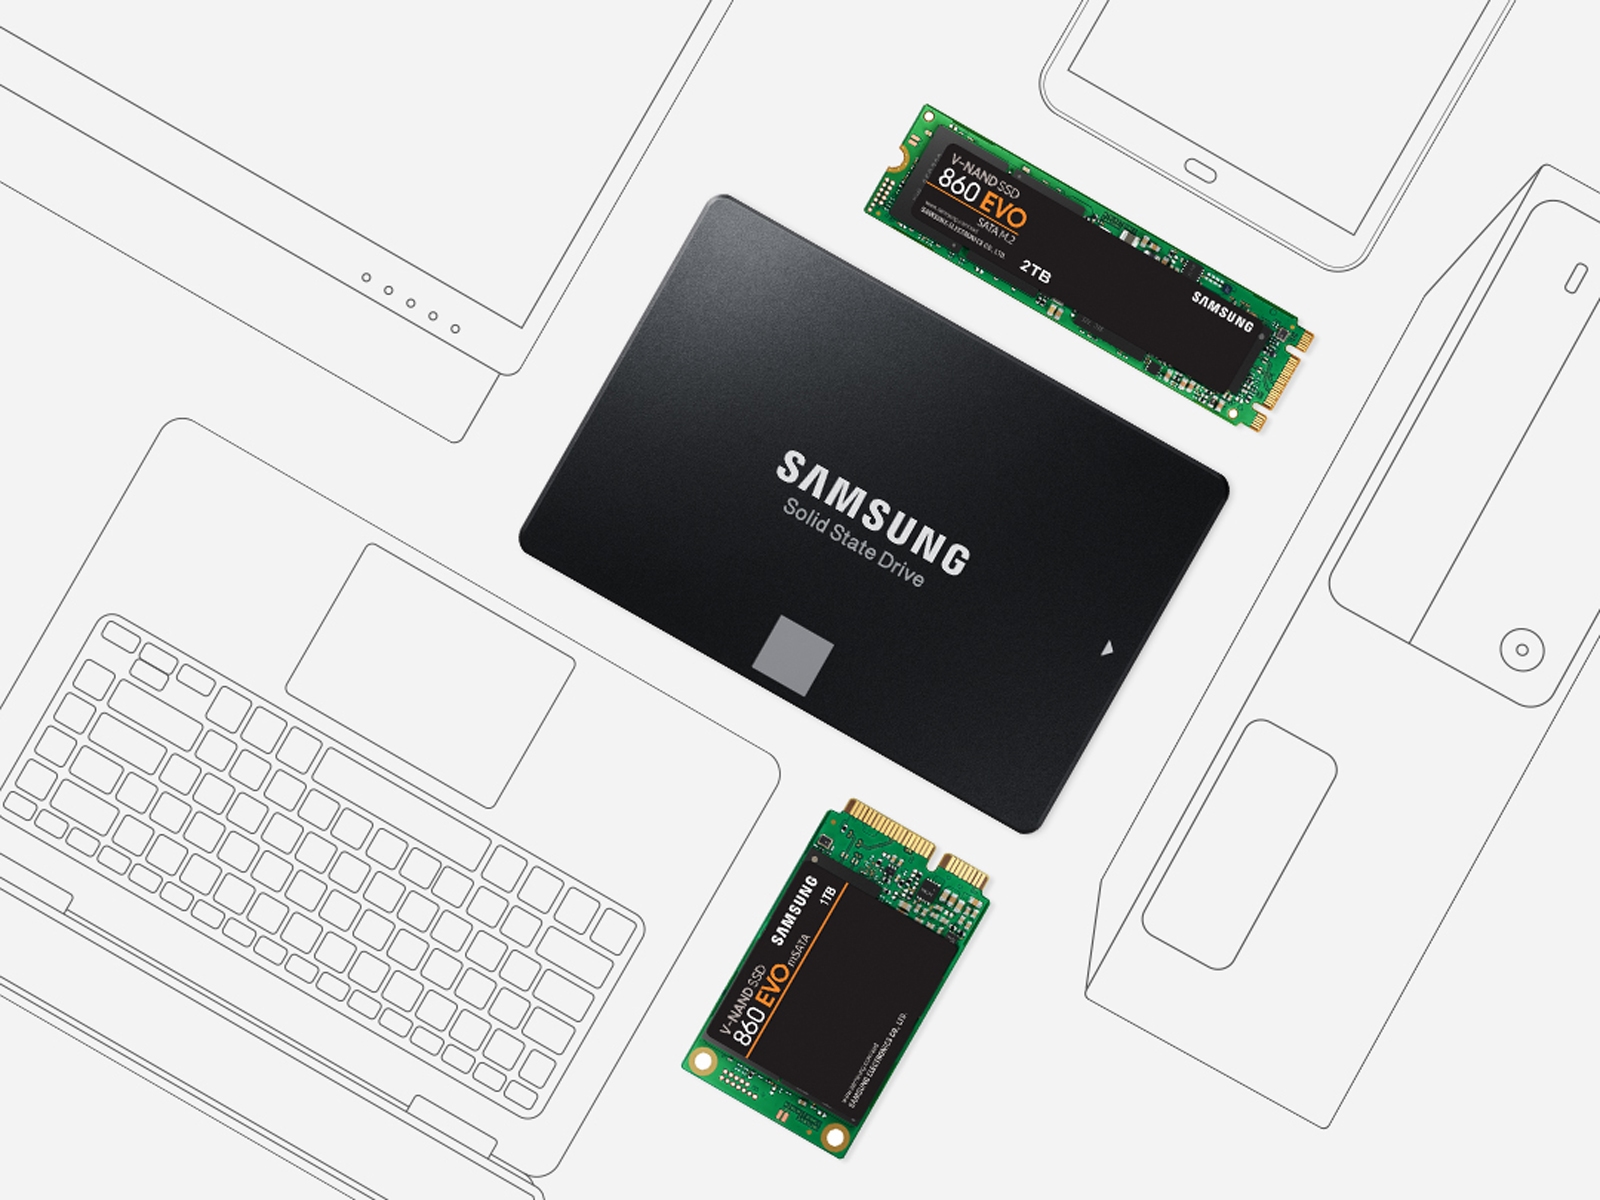 SSD 860 EVO 2.5" SATA III 500GB Memory & Storage - US